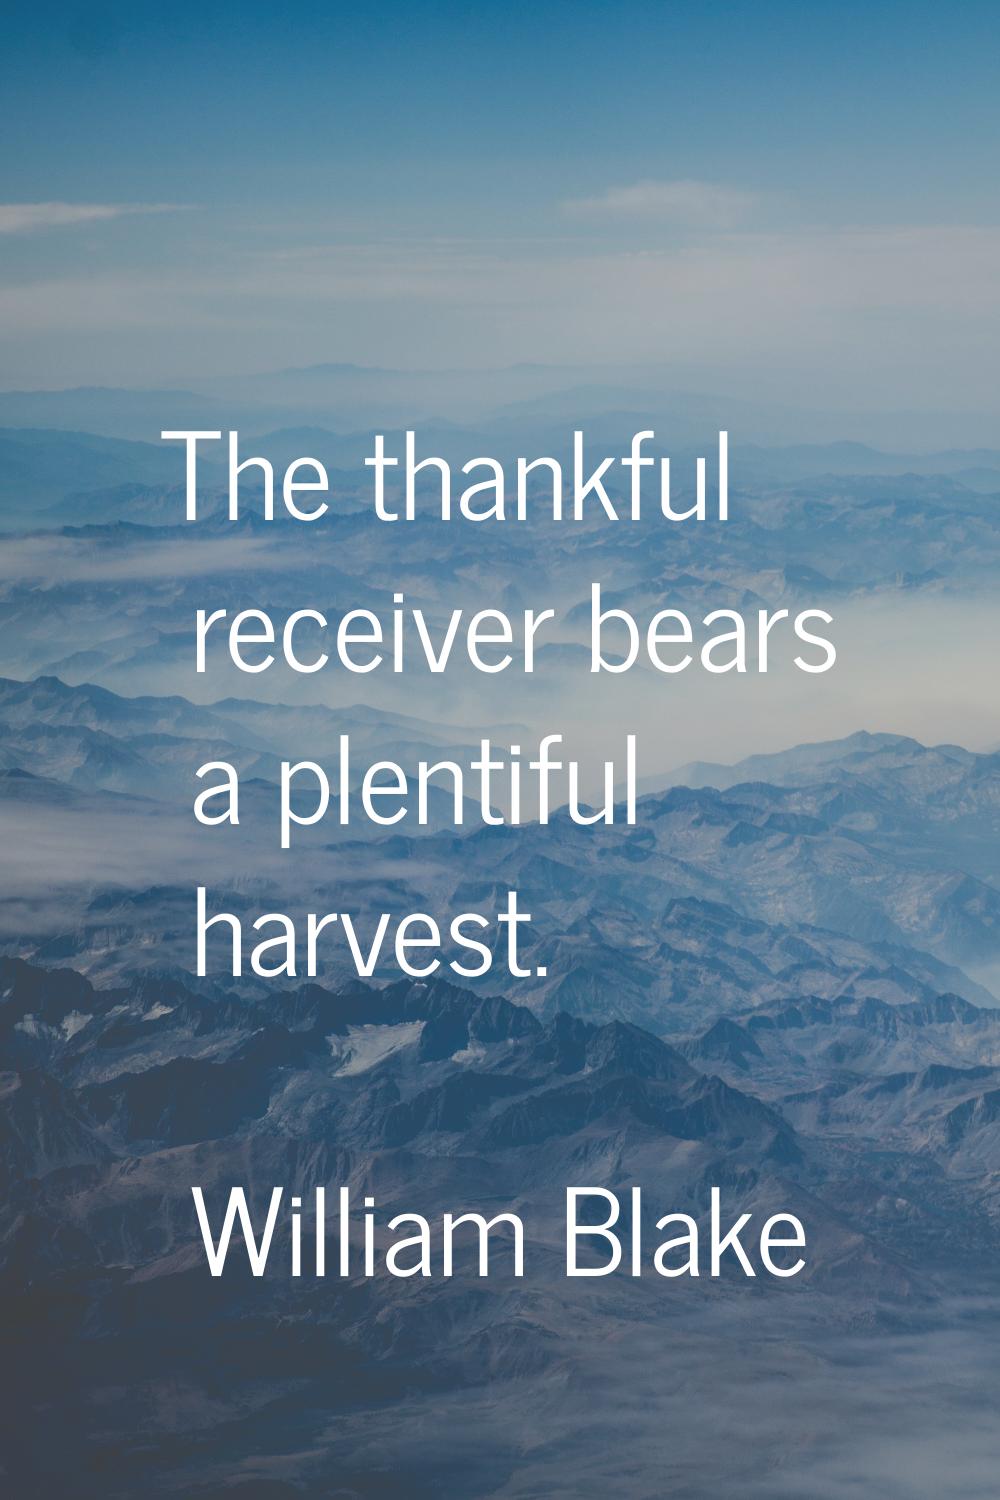 The thankful receiver bears a plentiful harvest.